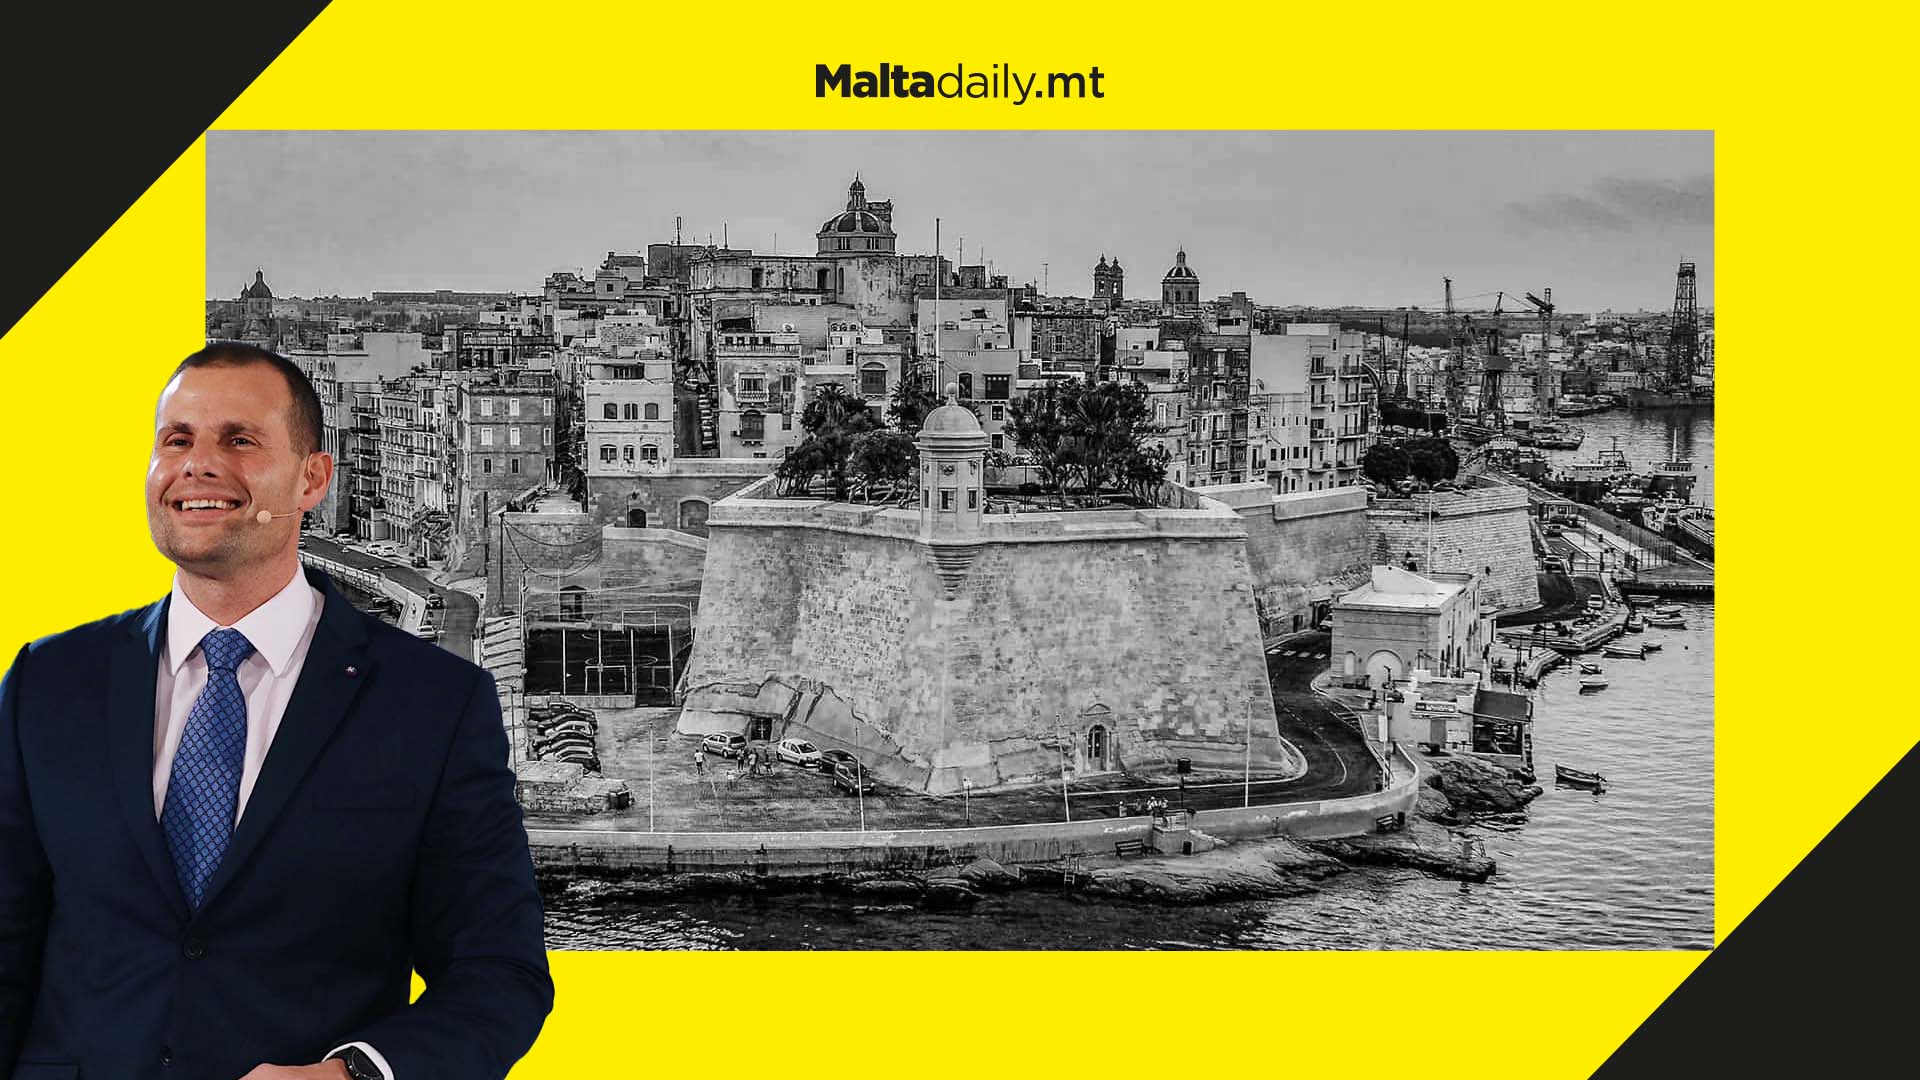 FATF task force will assess Malta’s grey-listing progress next month